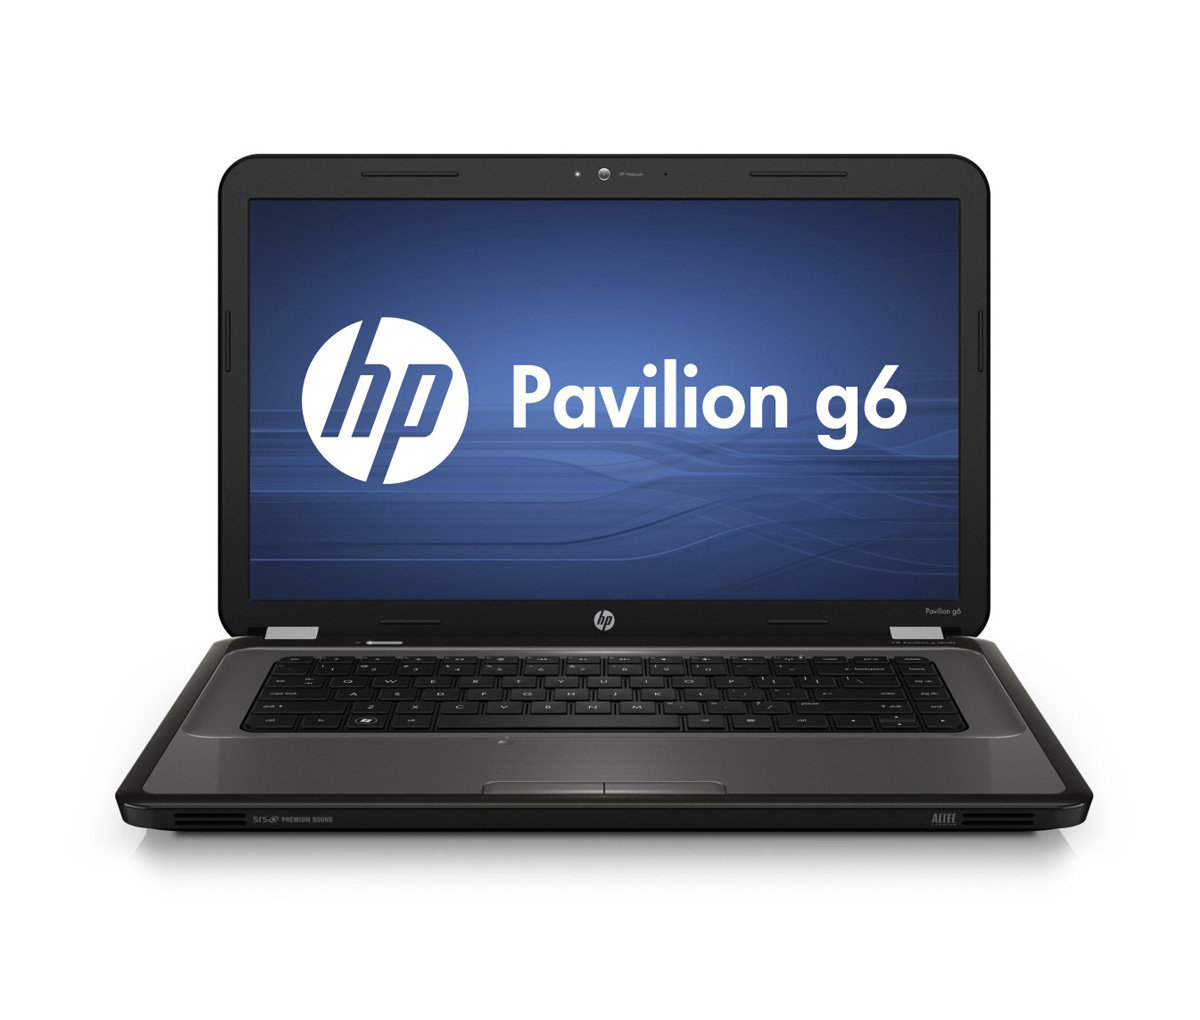 HP Pavilion g6-1d60us Notebook PC Front View